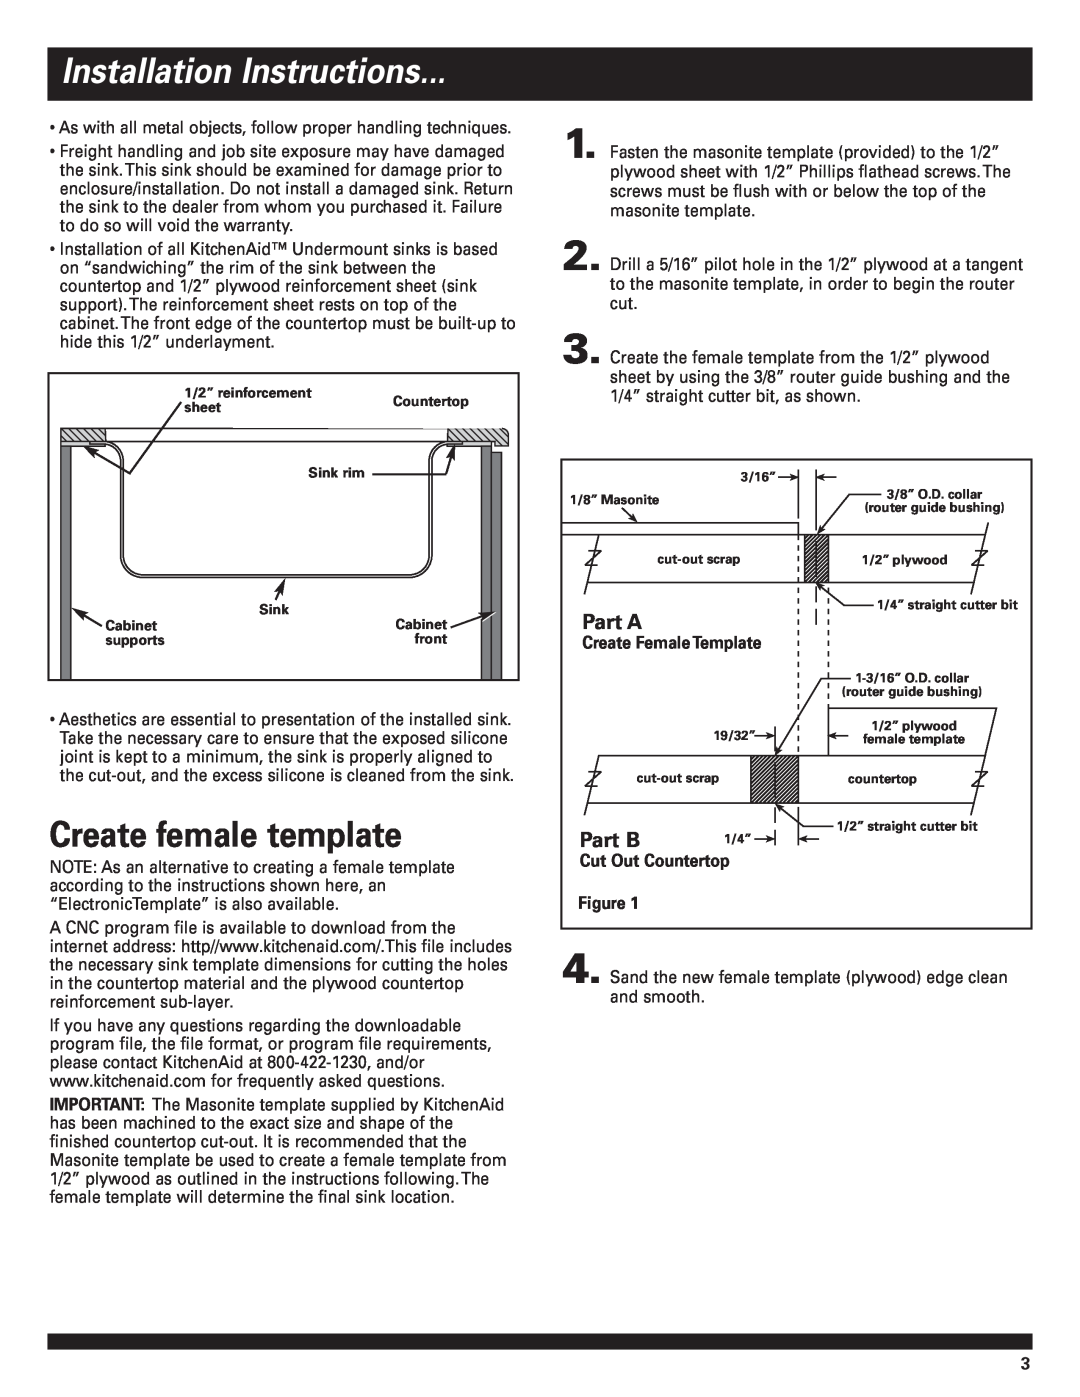 KitchenAid undermount Sinks installation instructions Installation Instructions, Create female template, Part A, Part B 